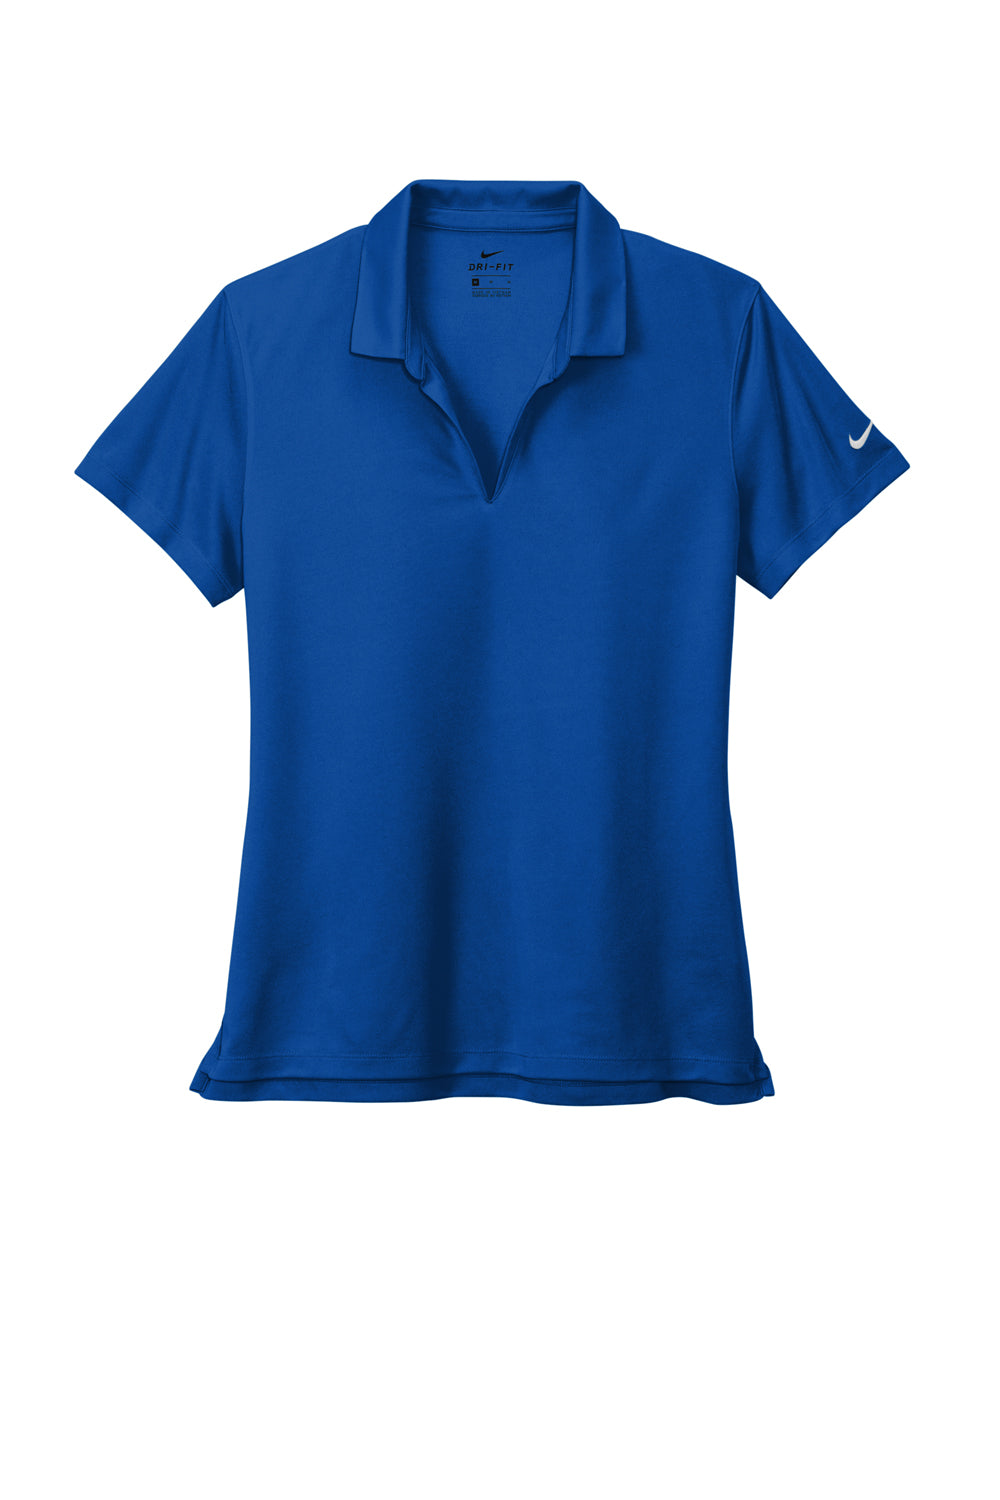 Nike NKDC1991 Womens Dri-Fit Moisture Wicking Micro Pique 2.0 Short Sleeve Polo Shirt Game Royal Blue Flat Front